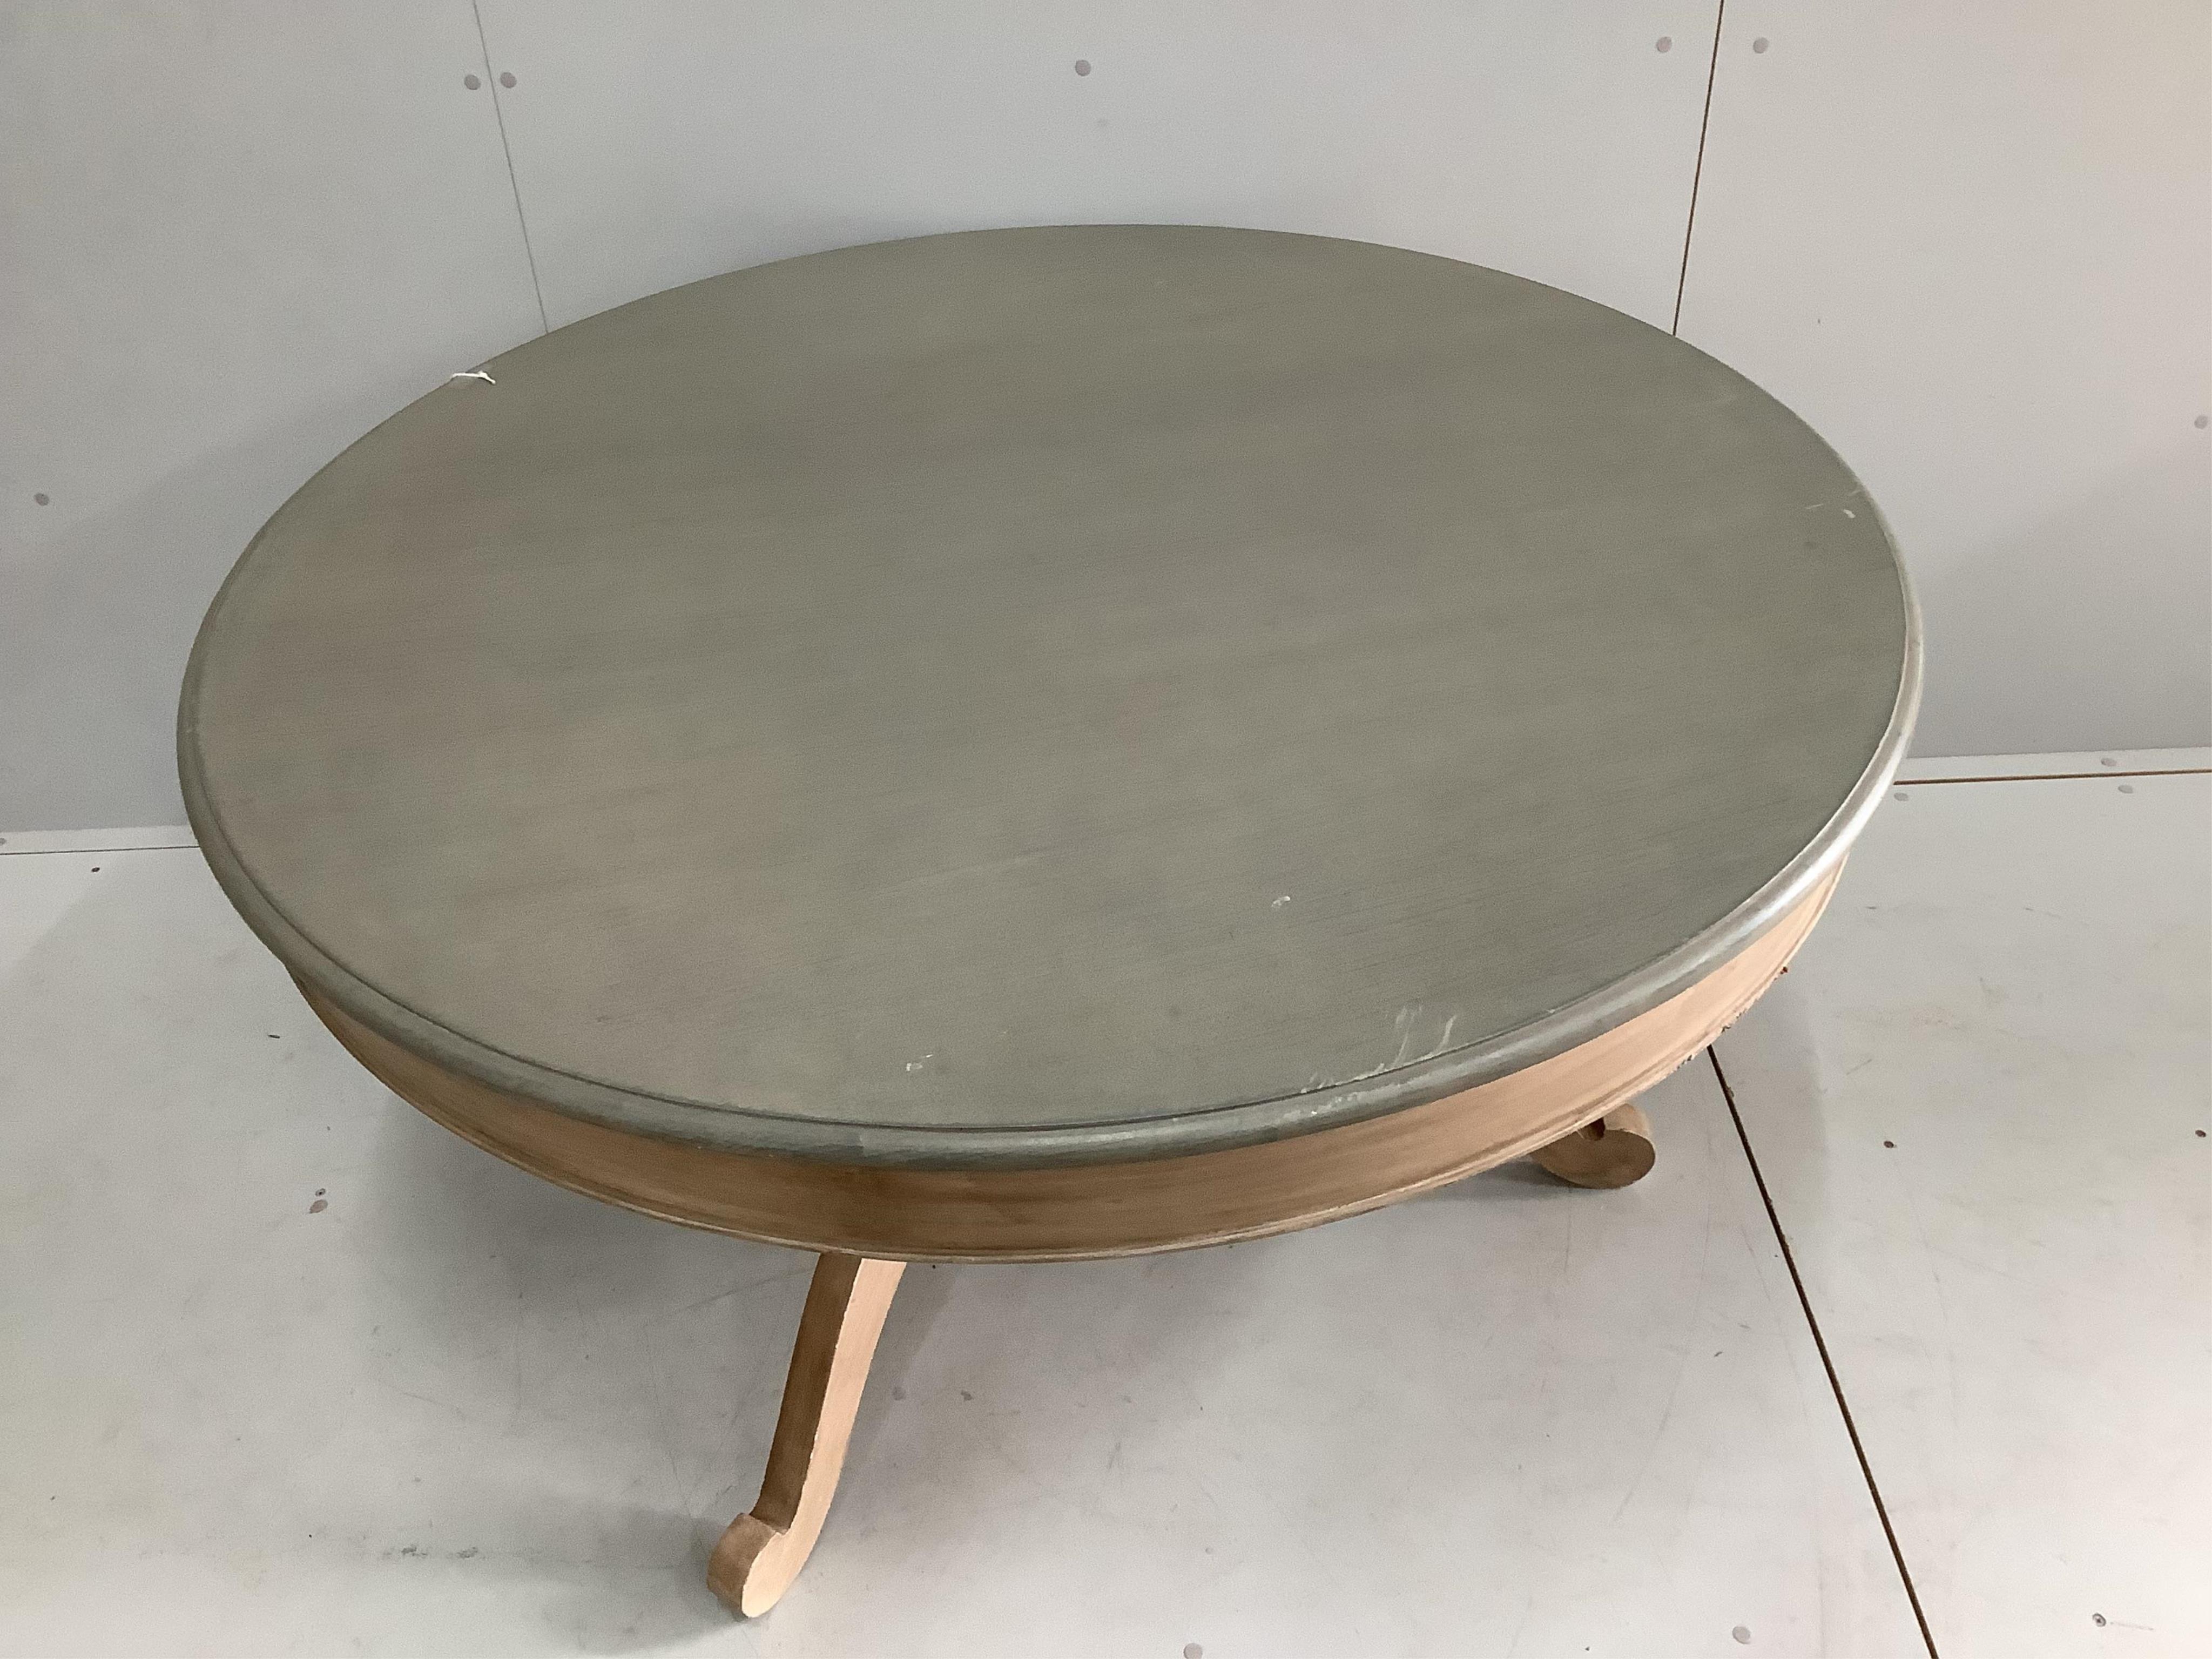 An Oka Furniture 'Arthur' circular table, diameter 130cm, height 74cm and six Oka French style limed oak chairs. Condition - good